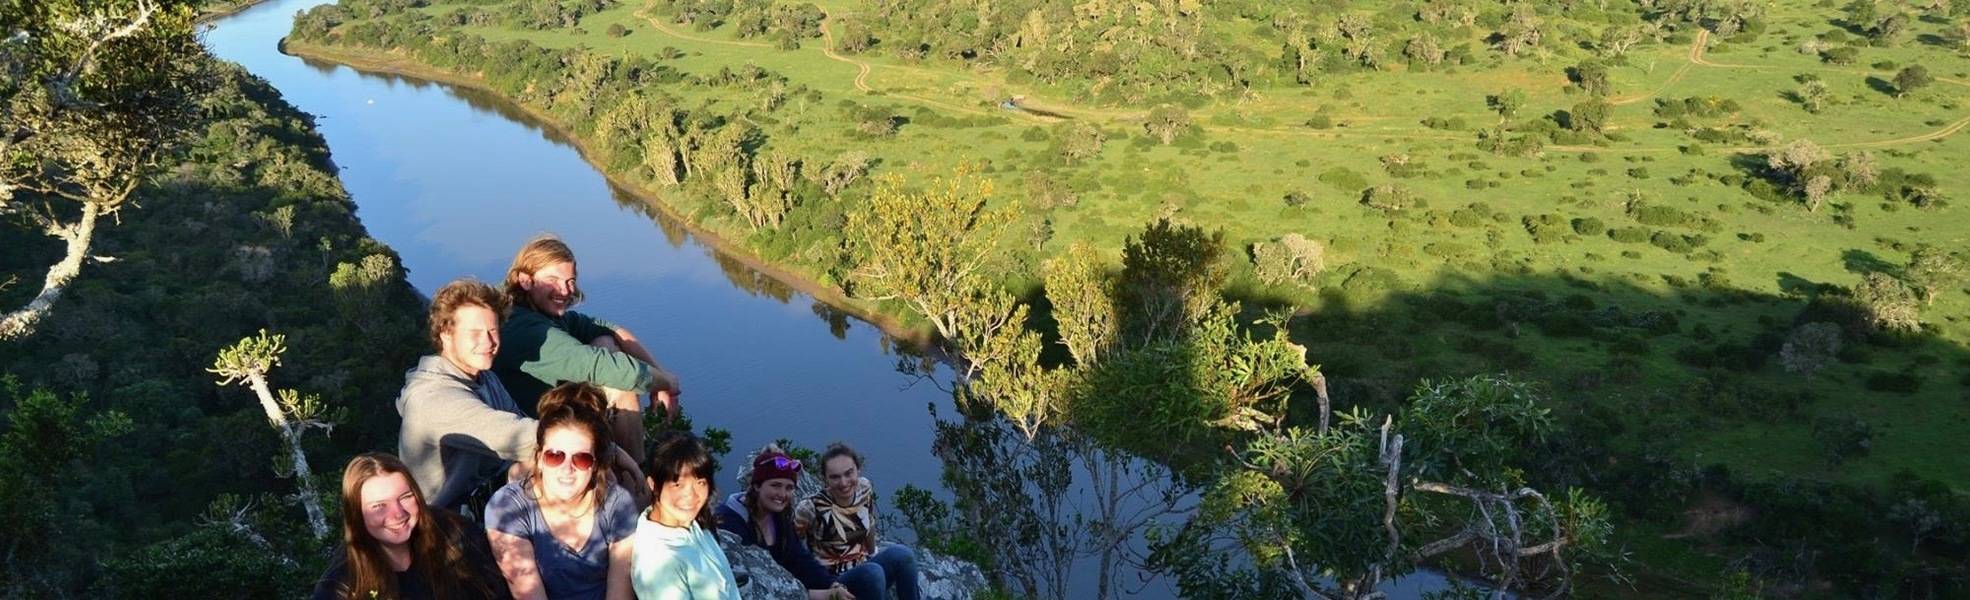 South Africa Volunteer Travel - Garden Route